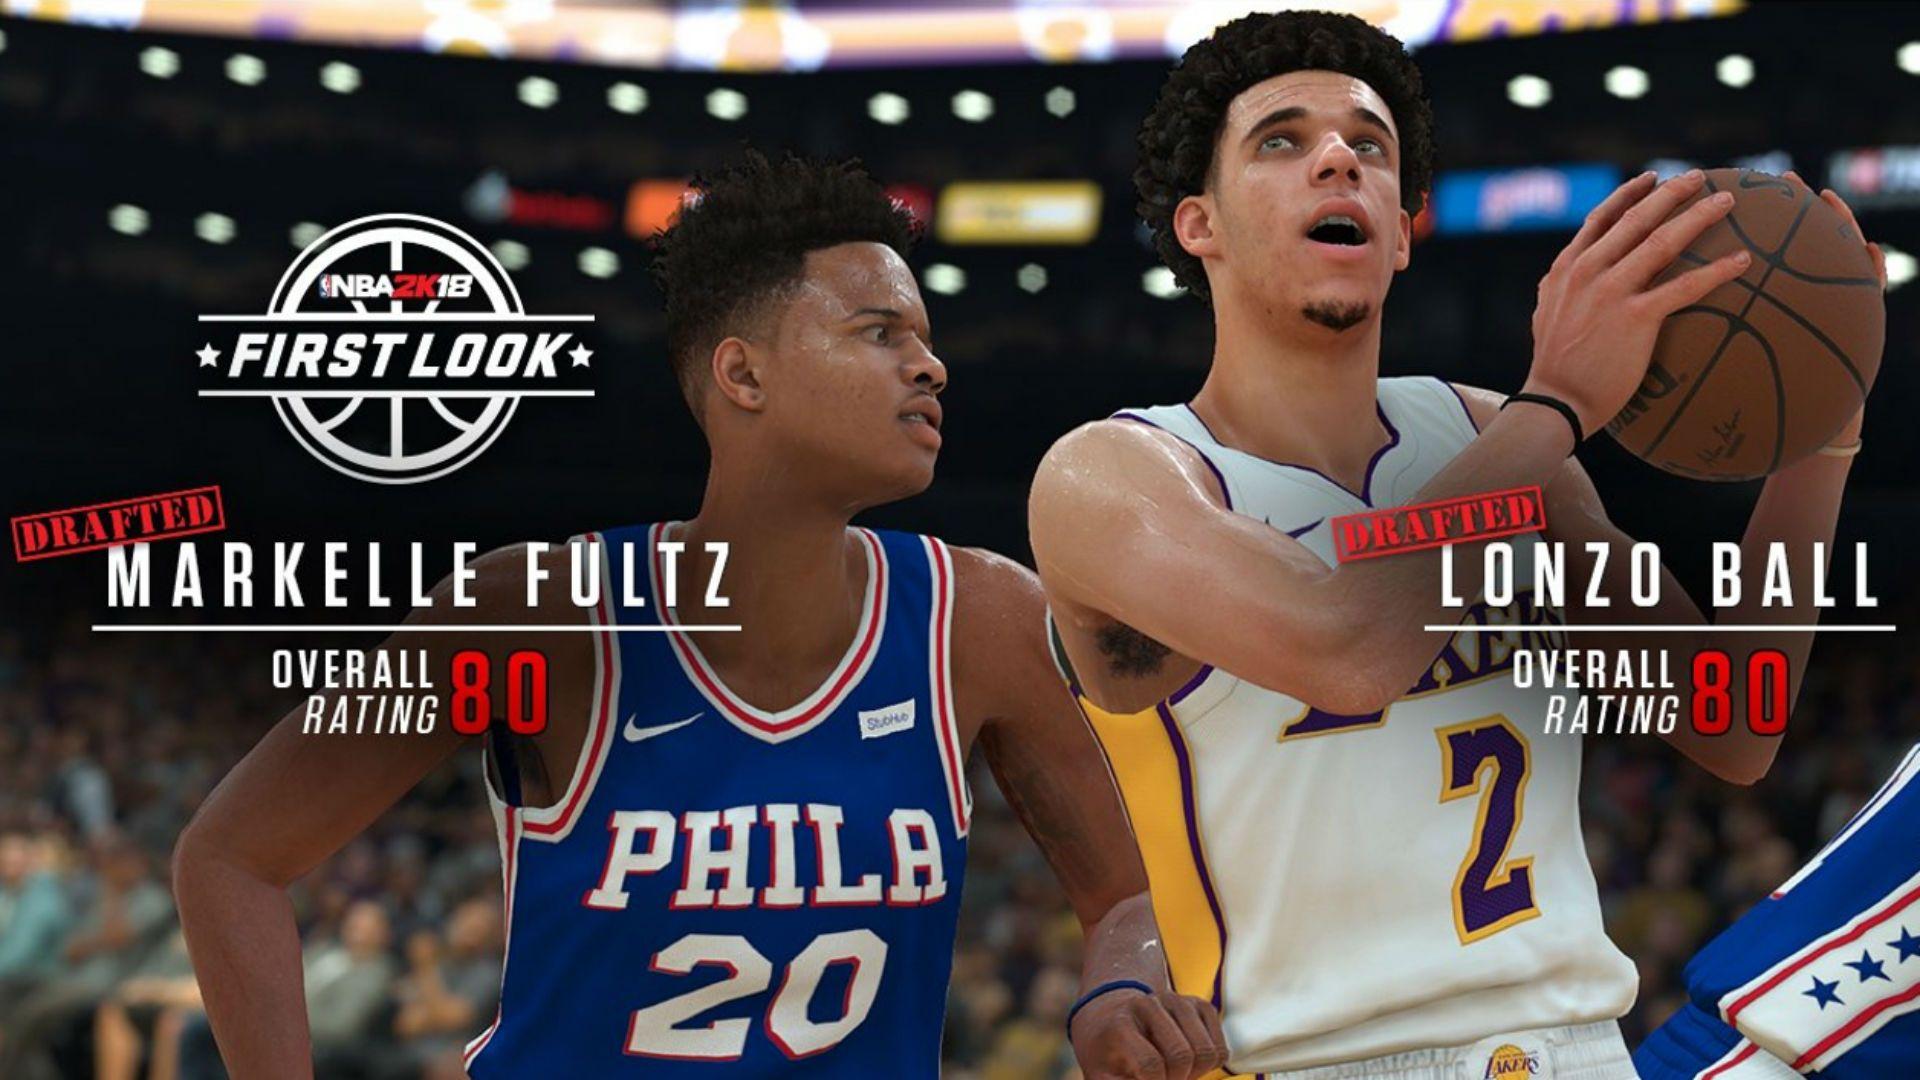 Markelle Fultz, Lonzo Ball earn high player ratings in 'NBA 2K18